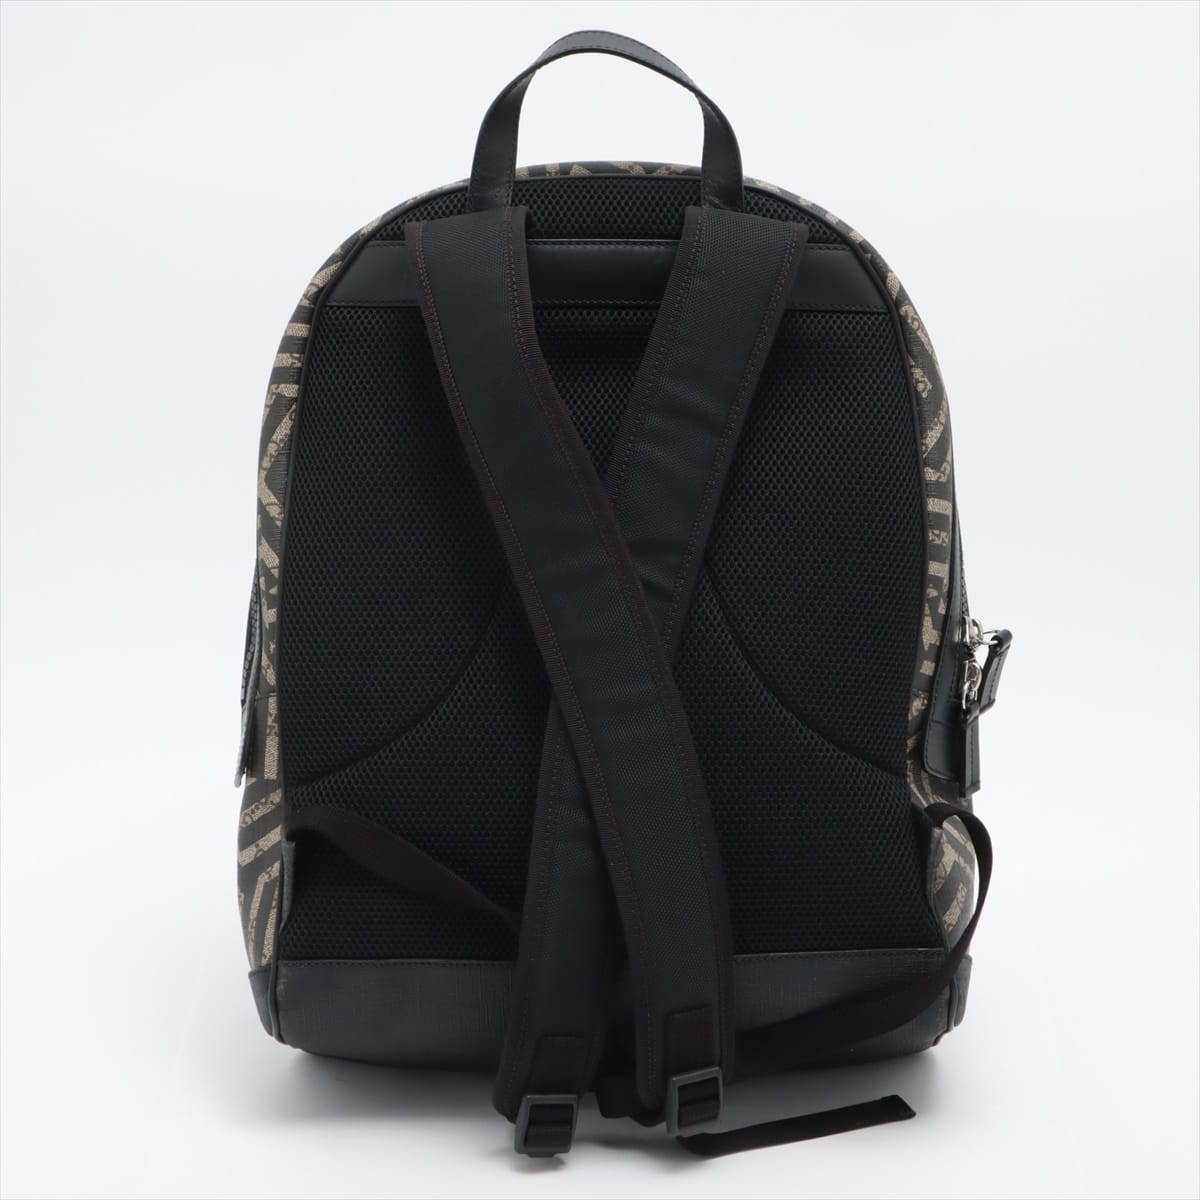 Gucci GG Caleido Backpack Black 406370